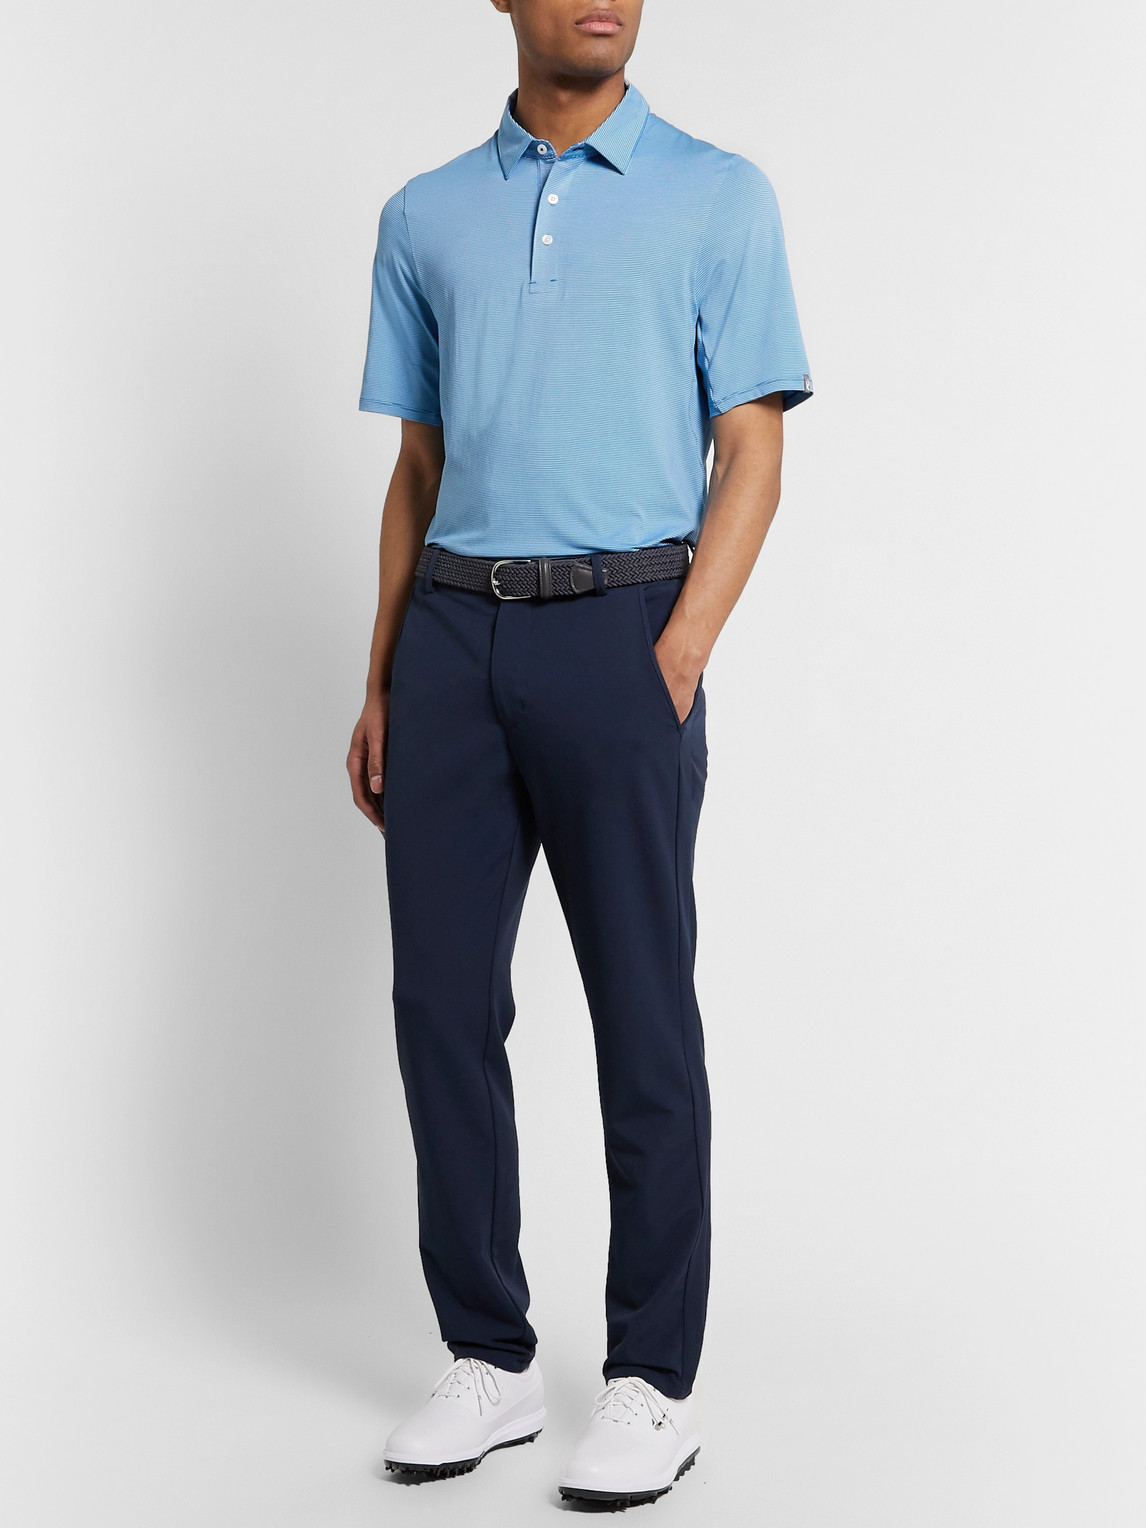 Kjus Soren Slim-fit Striped Stretch-jersey Golf Polo Shirt In Blue